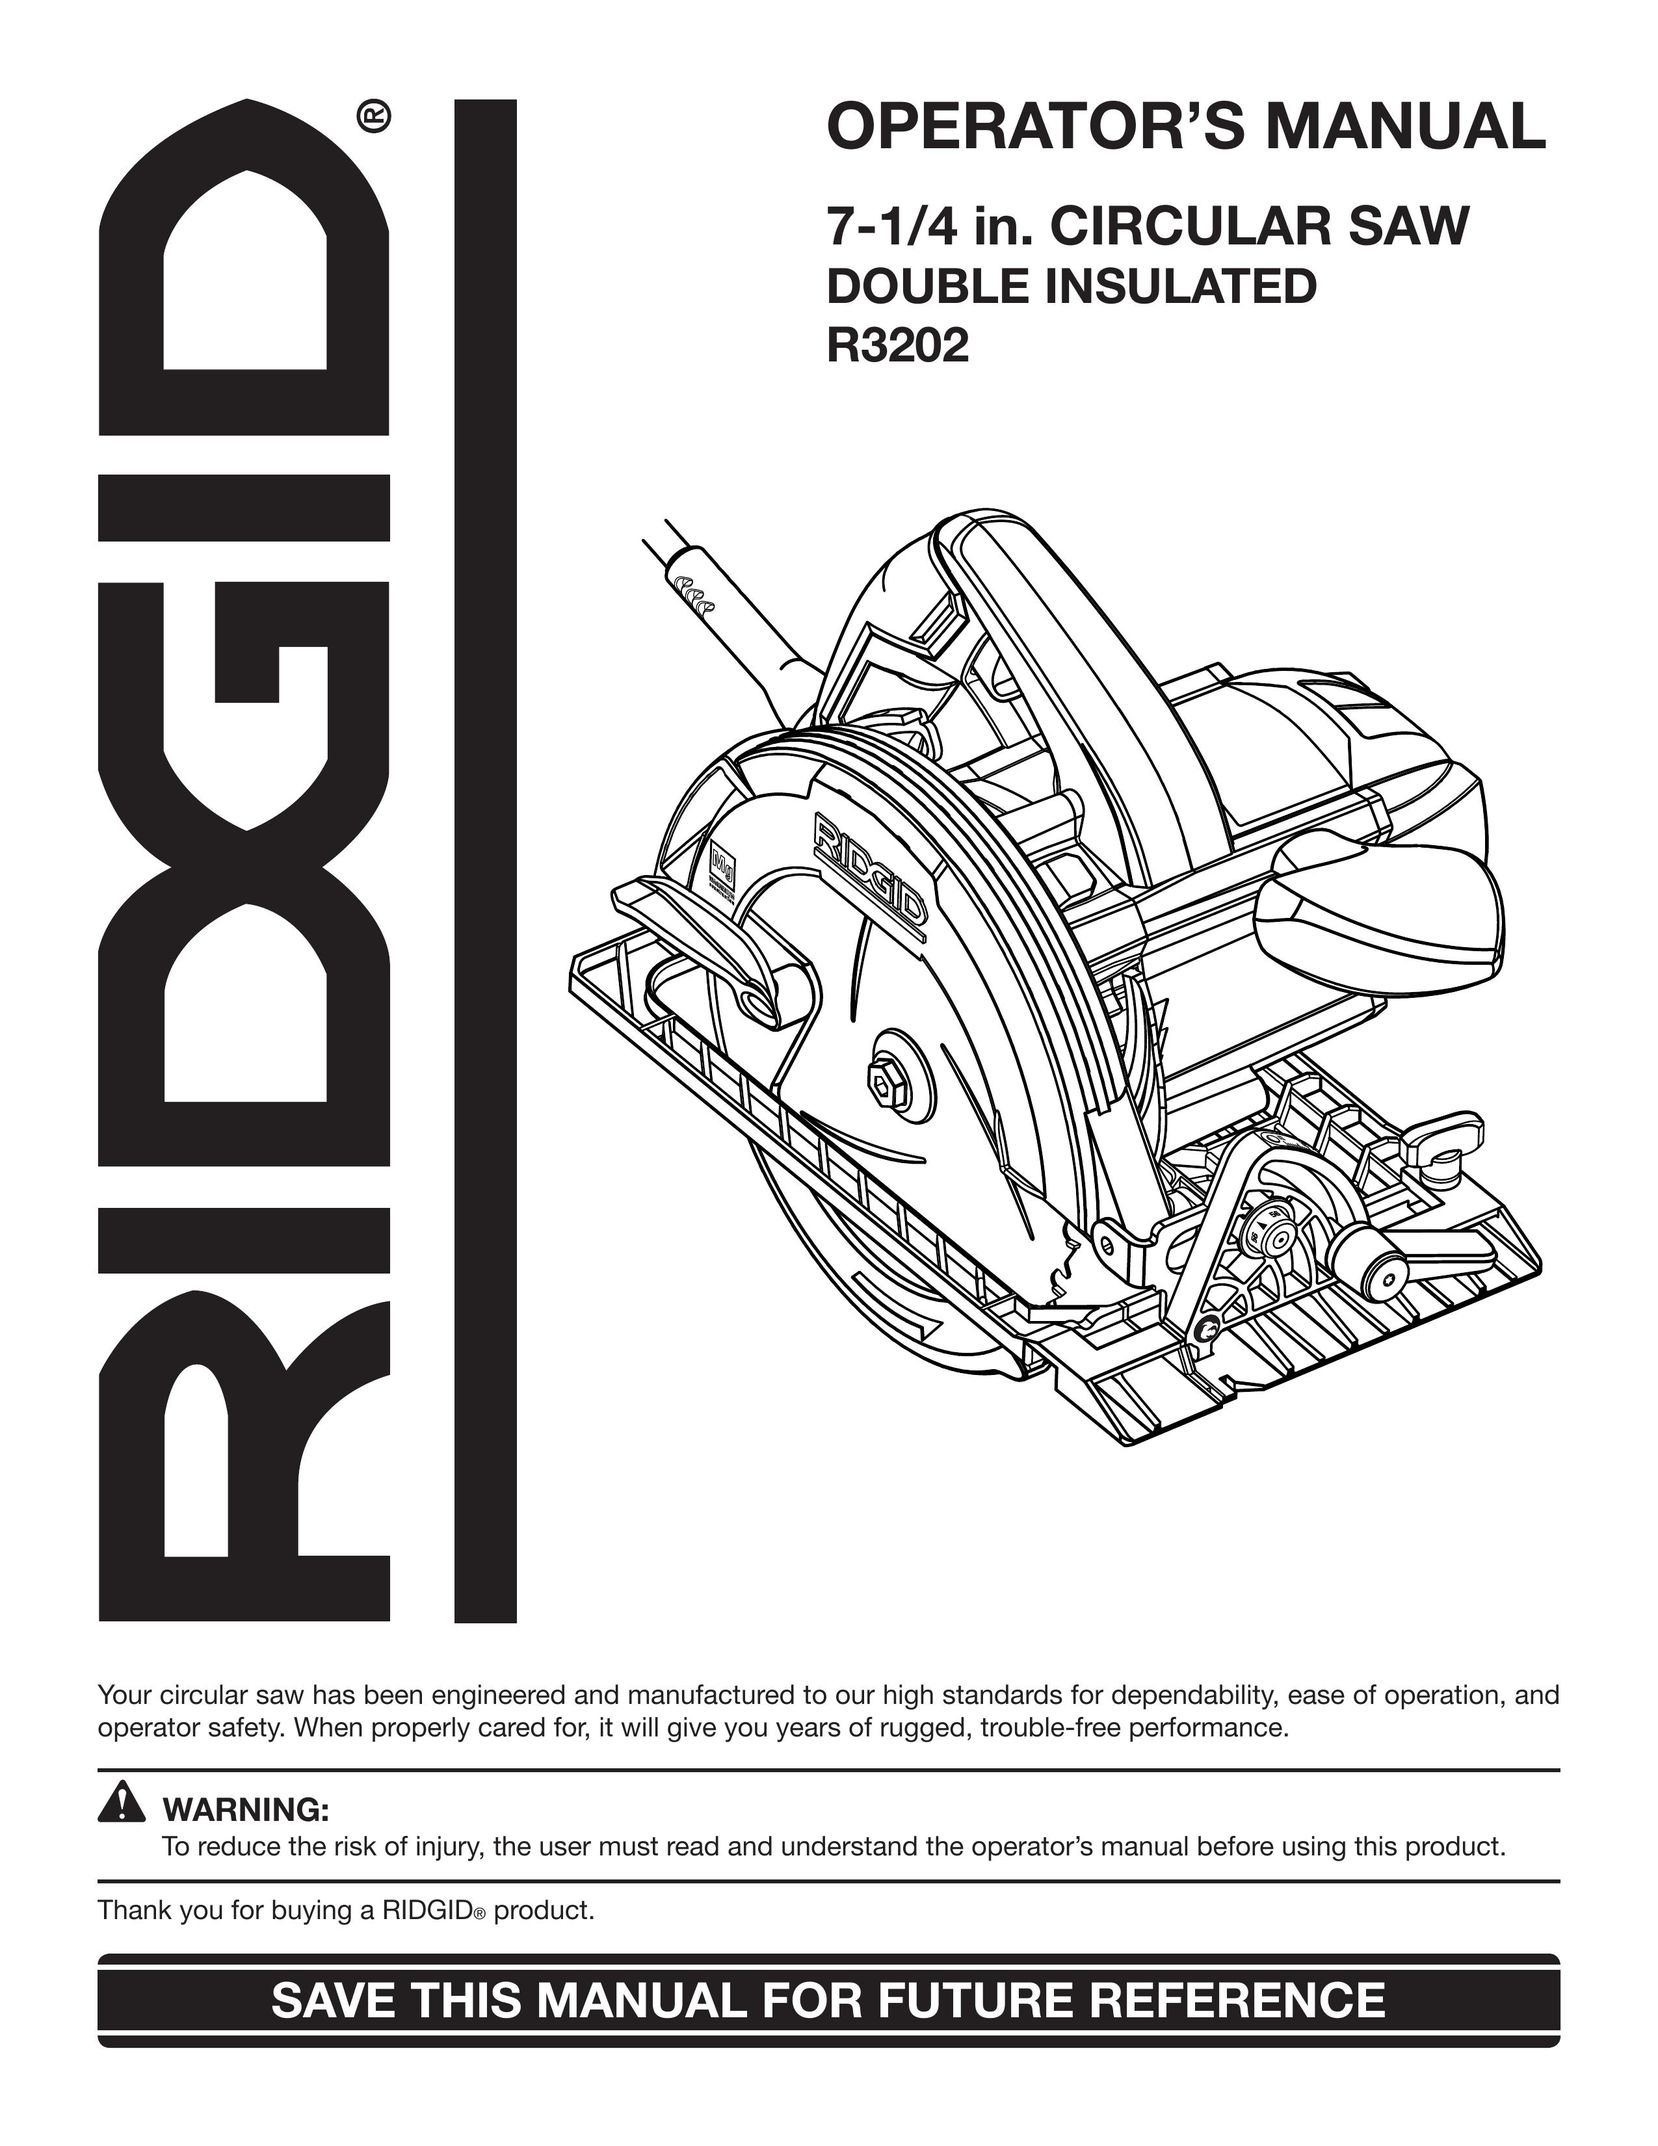 RIDGID R3202 Saw User Manual